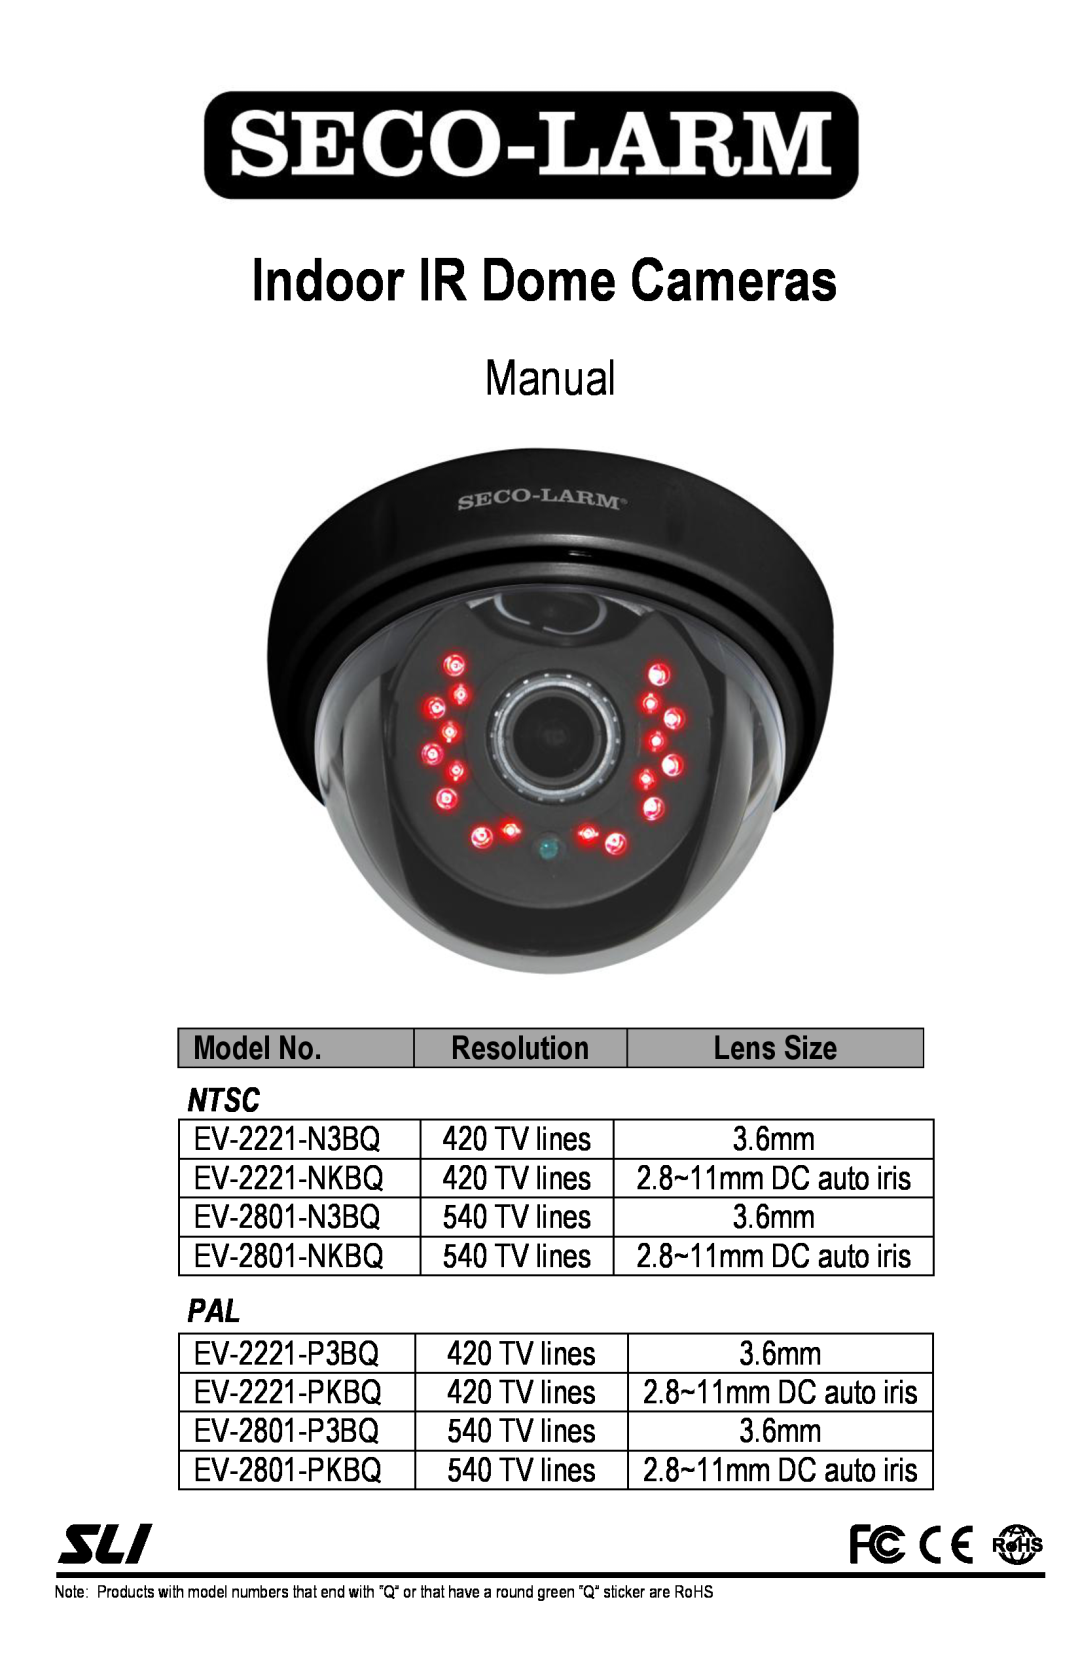 SECO-LARM USA EV-2221-N3BQ, EV-2221-PKBQ manual Model No, Resolution, Lens Size, Indoor IR Dome Cameras, Manual, Ntsc 